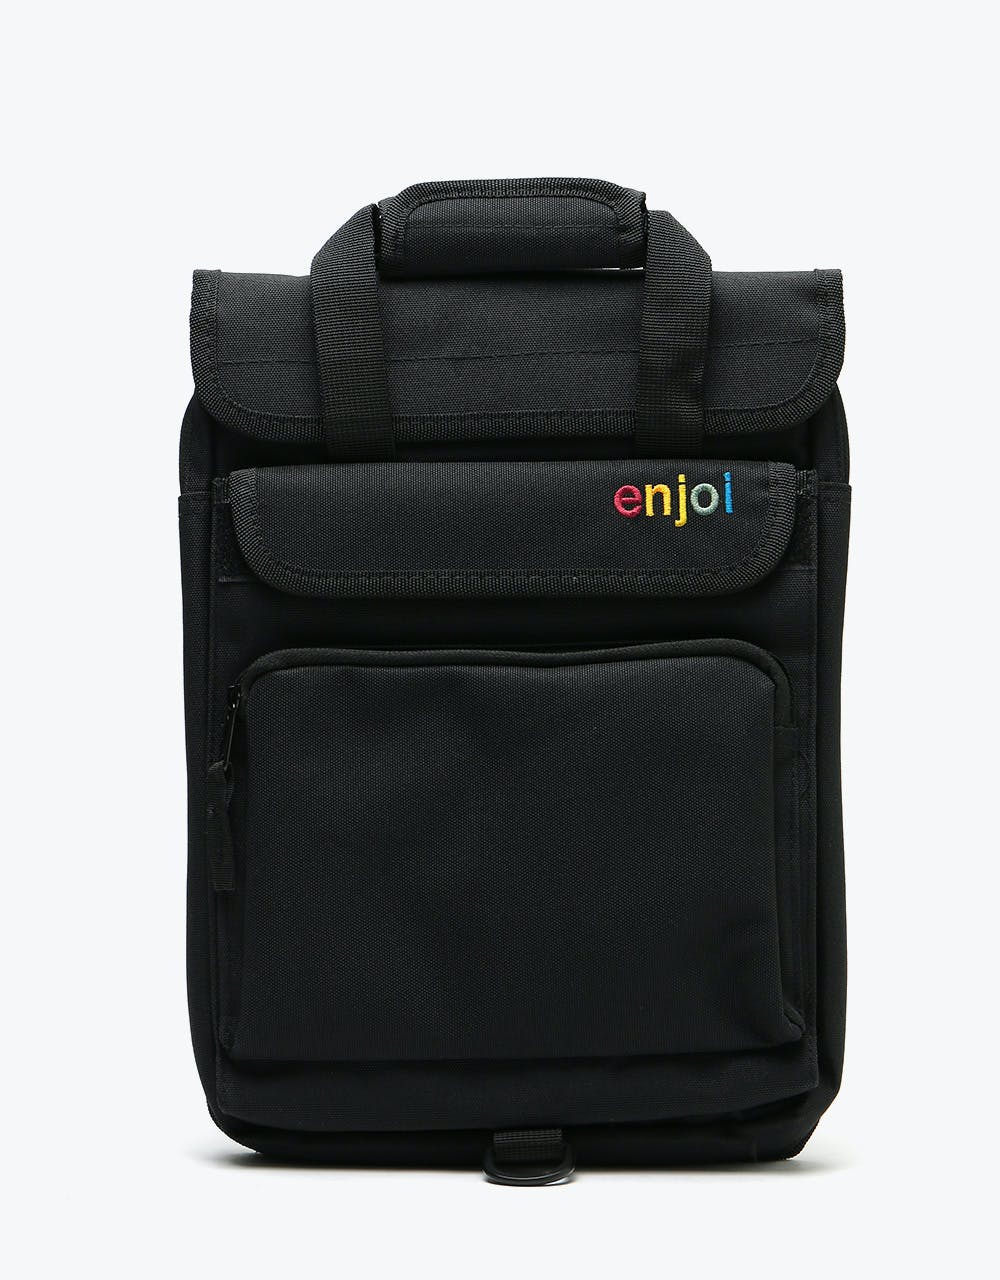 Enjoi Field Bag - Black